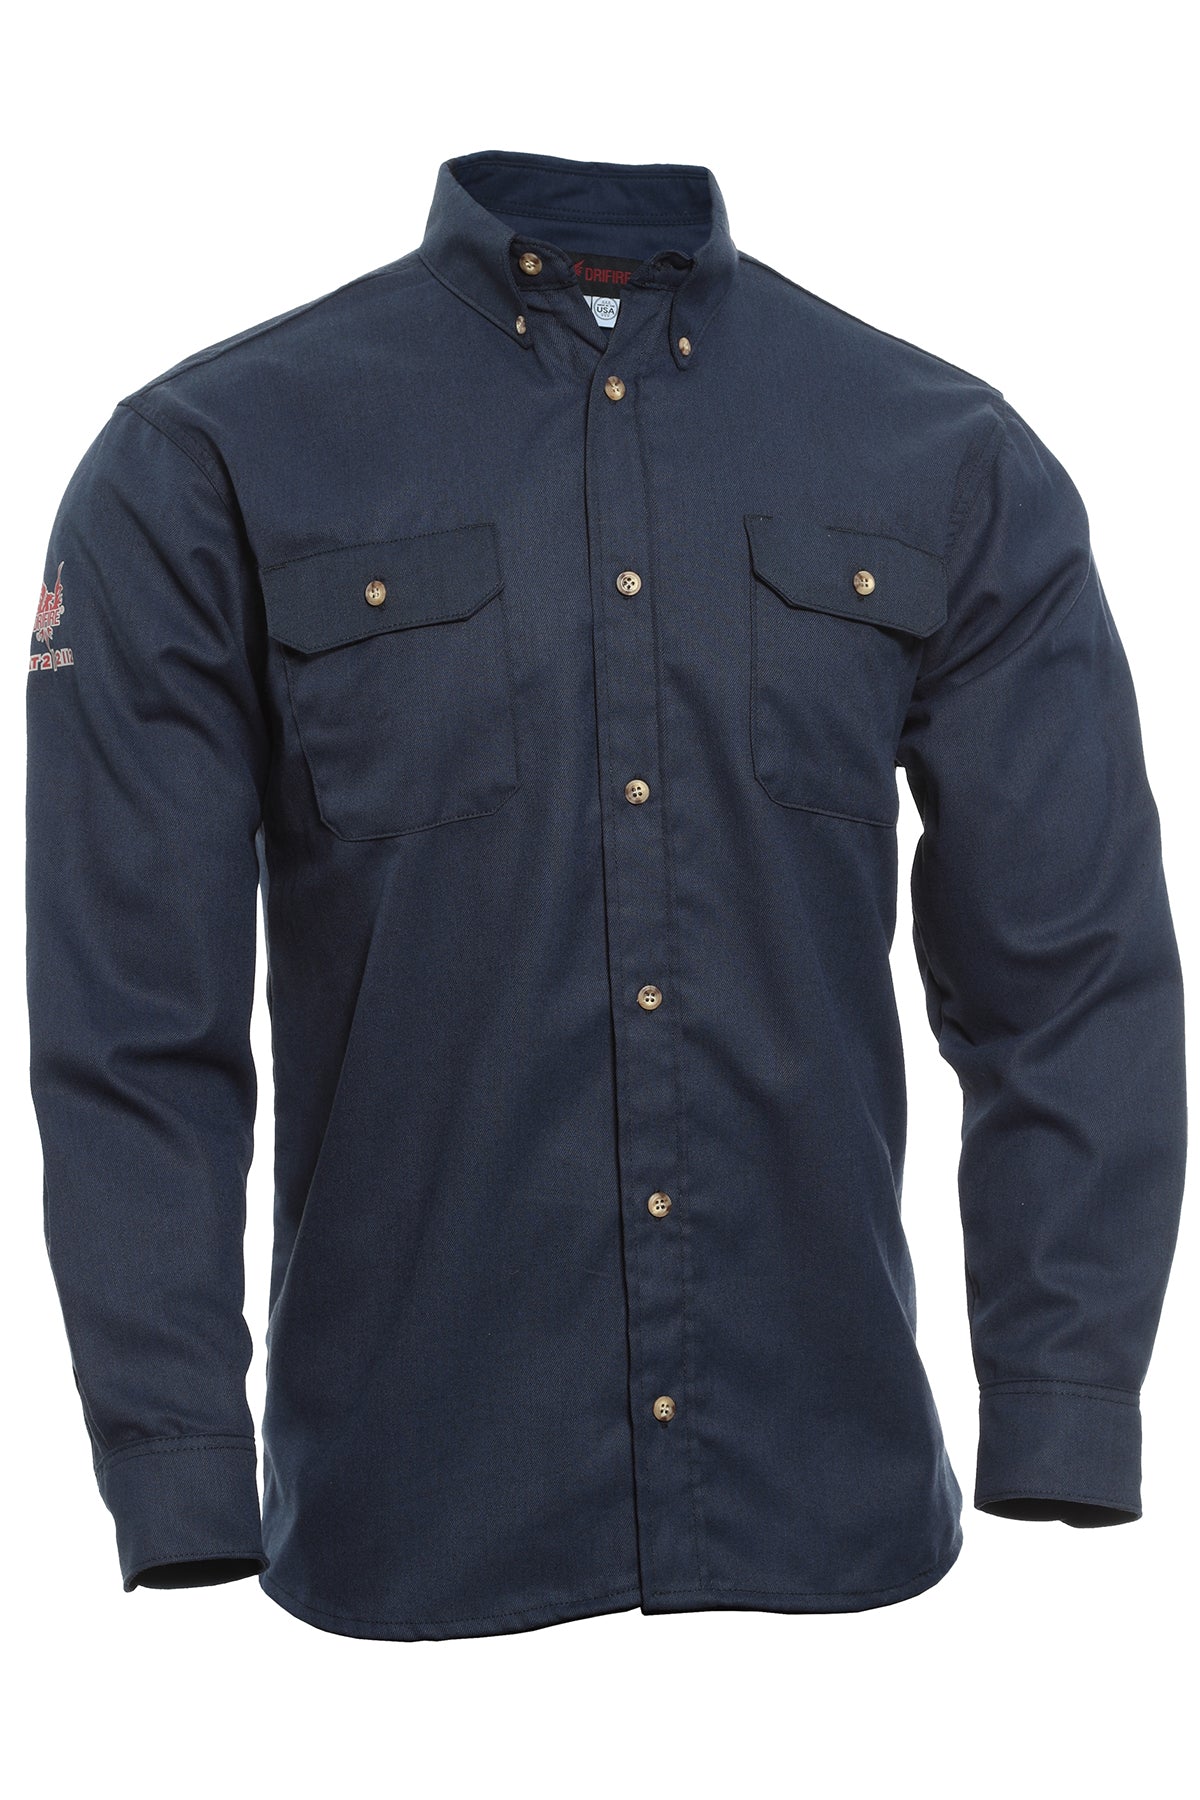 DRIFIRE Tecgen Select Navy Blue 5.5 oz Work Shirt TCG011602